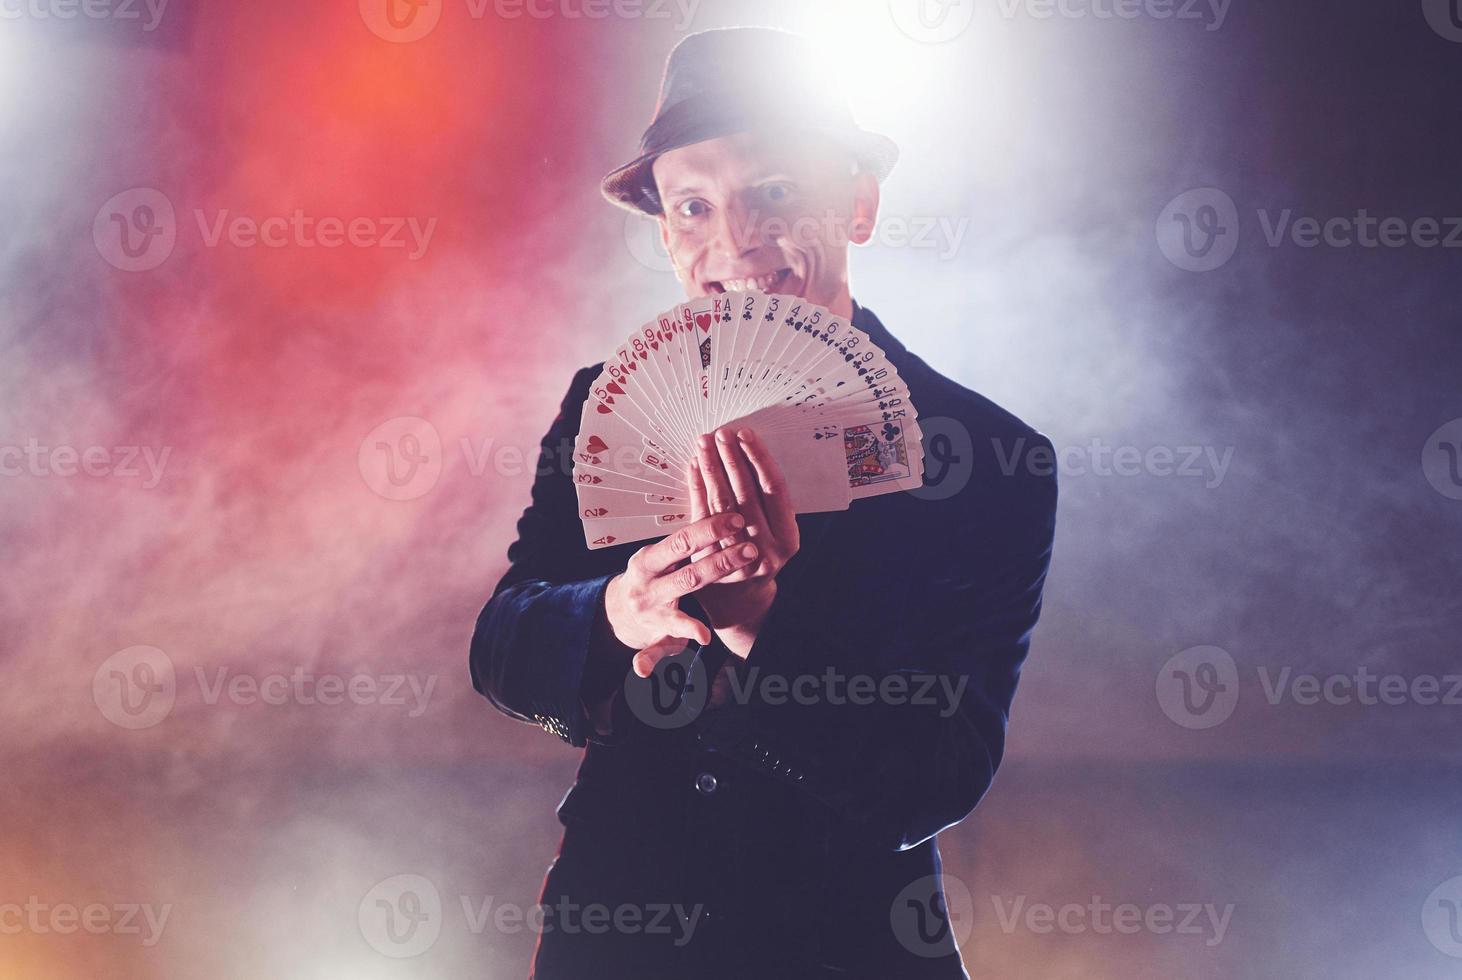 mago mostrando truco con naipes. magia o destreza, circo, juegos de azar. prestidigitador en cuarto oscuro con niebla foto